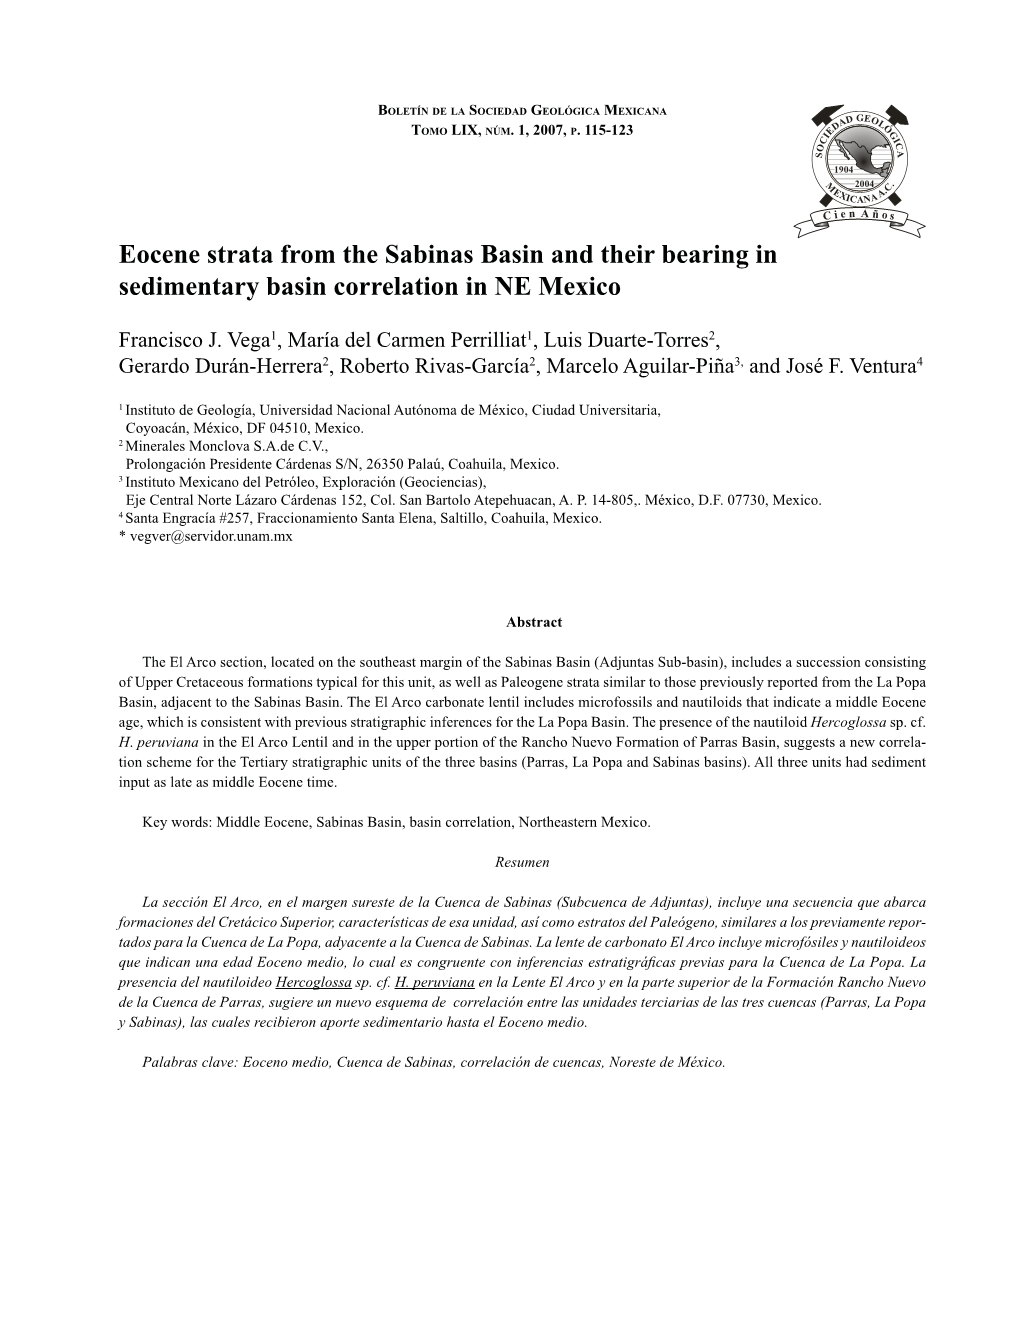 Eocene Strata from the Sabinas Basin and Their Bearing in Sedimentary Basin Correlation in NE Mexico